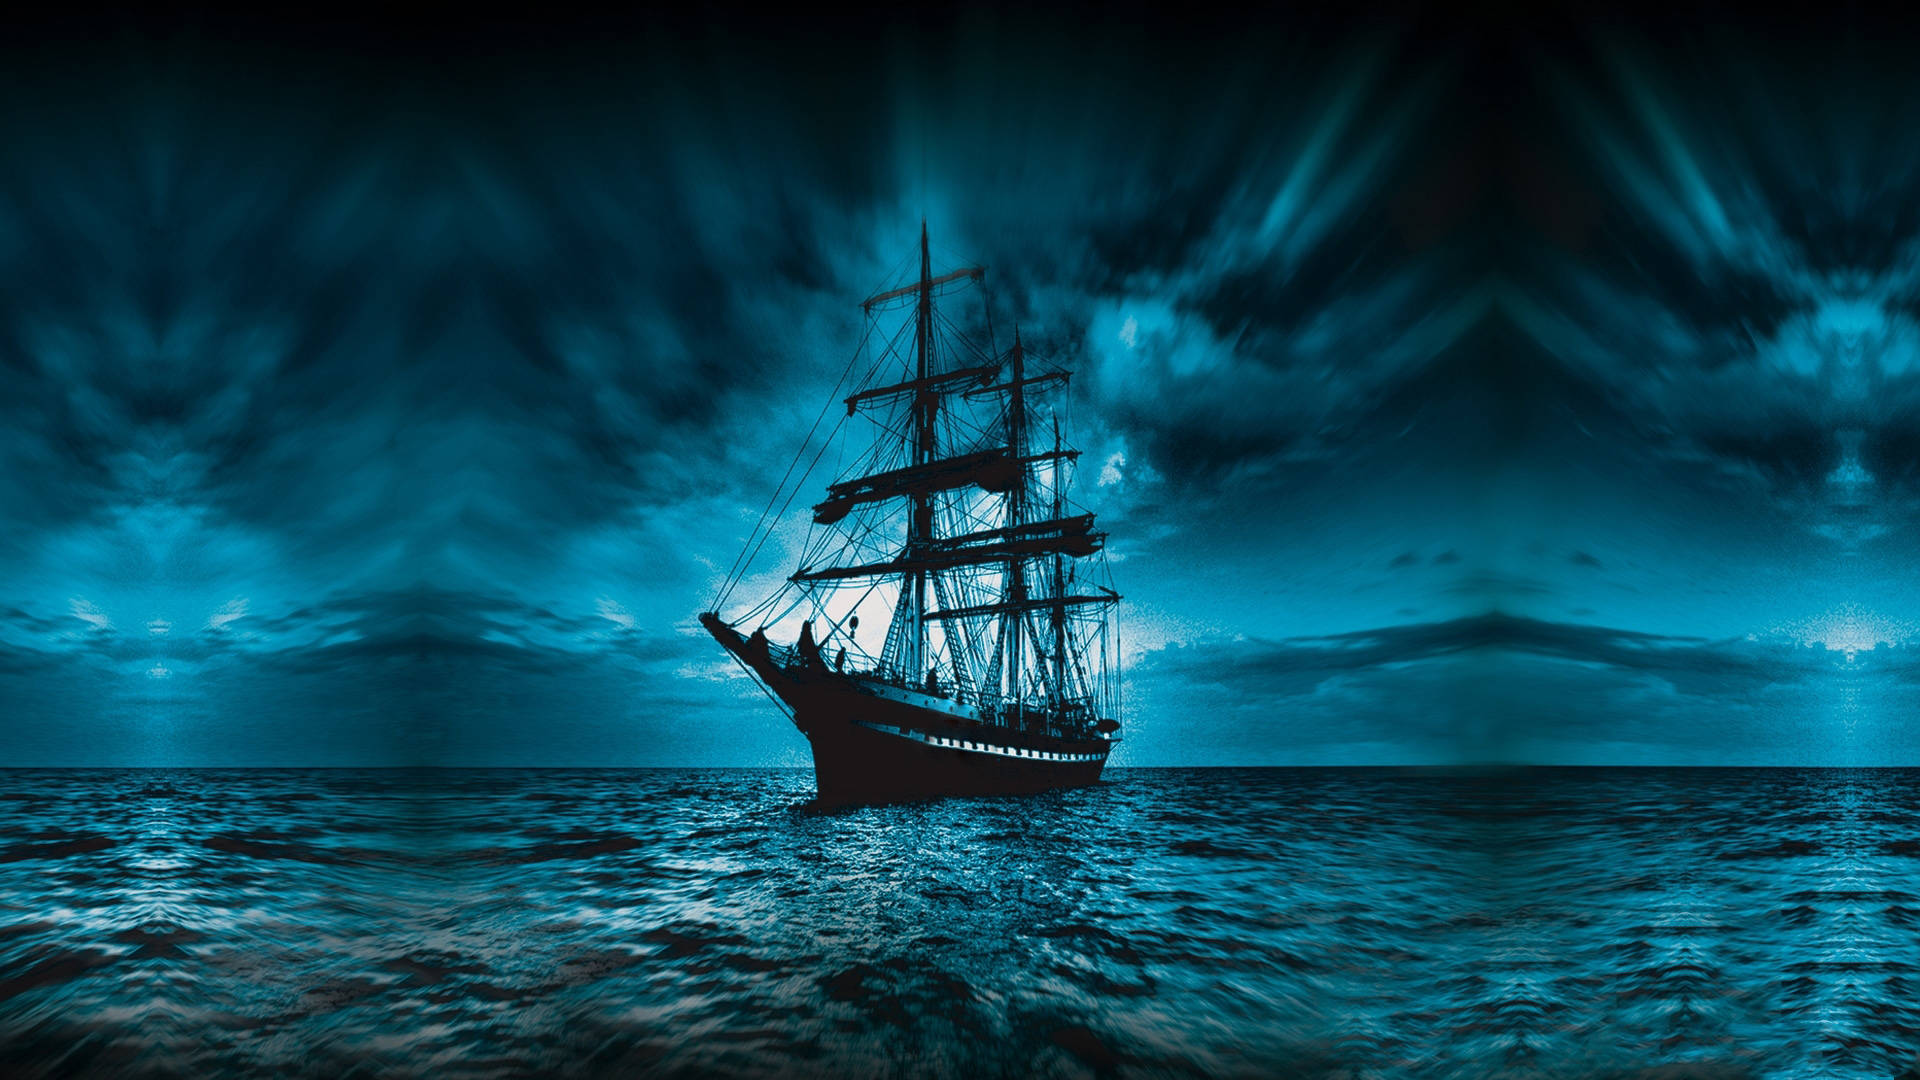 Sailing Under Supernatural Skies Wallpaper